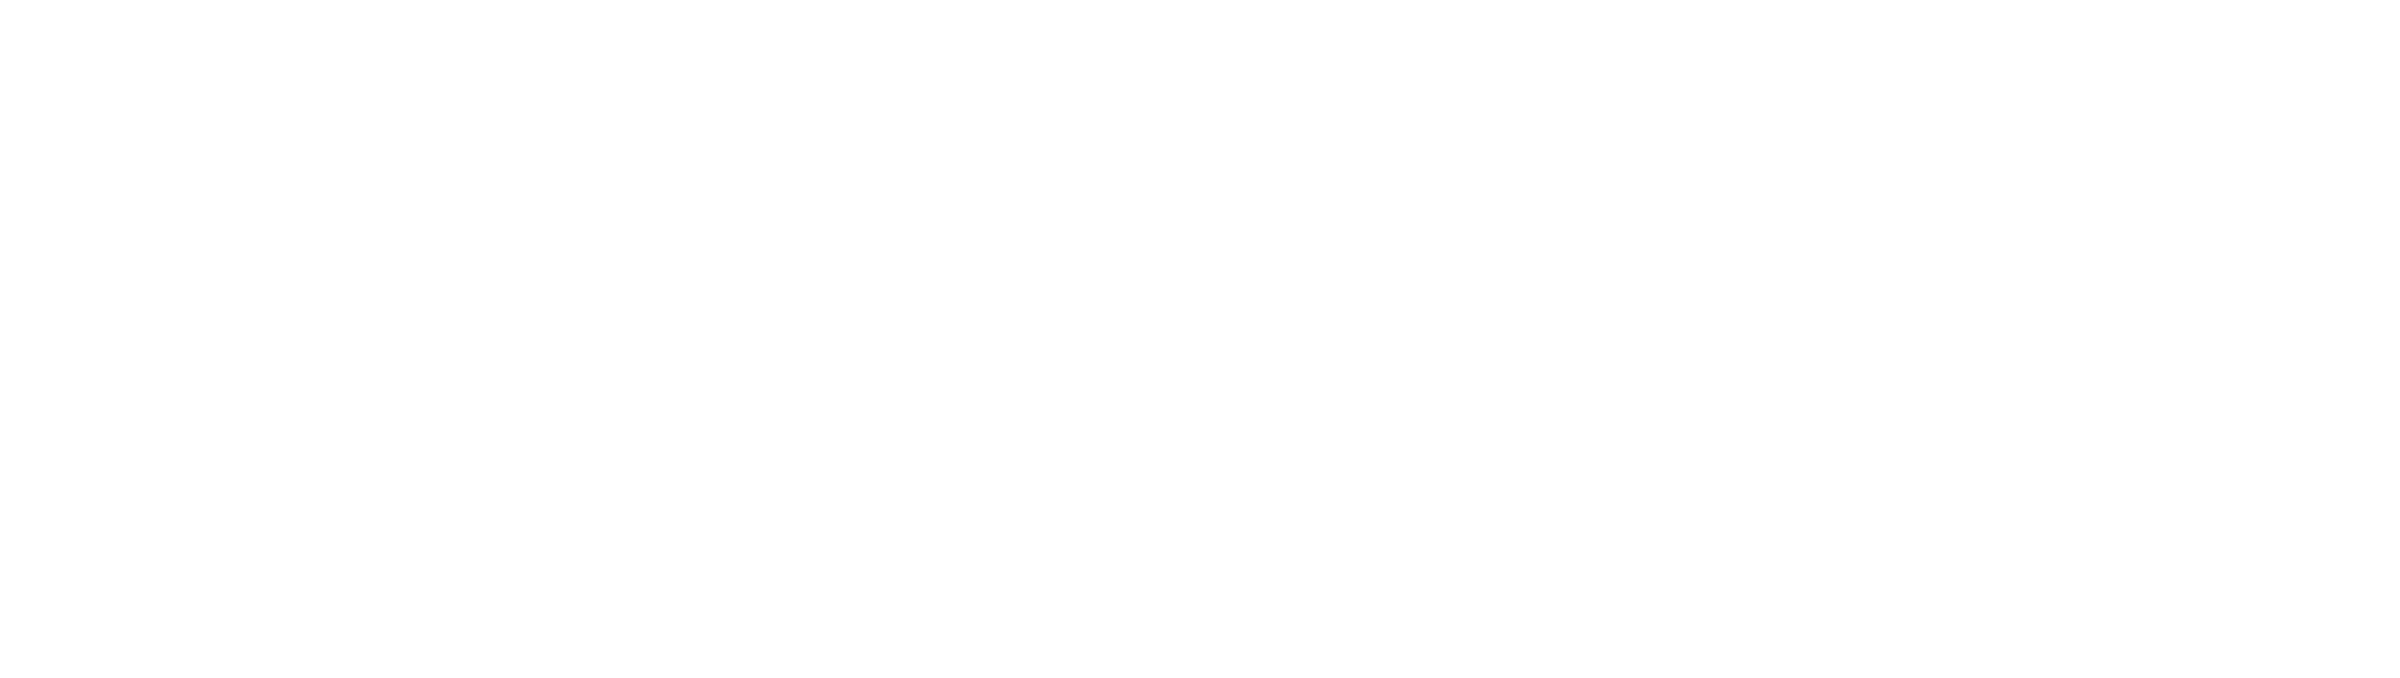 vimeo-logo-white-transparent